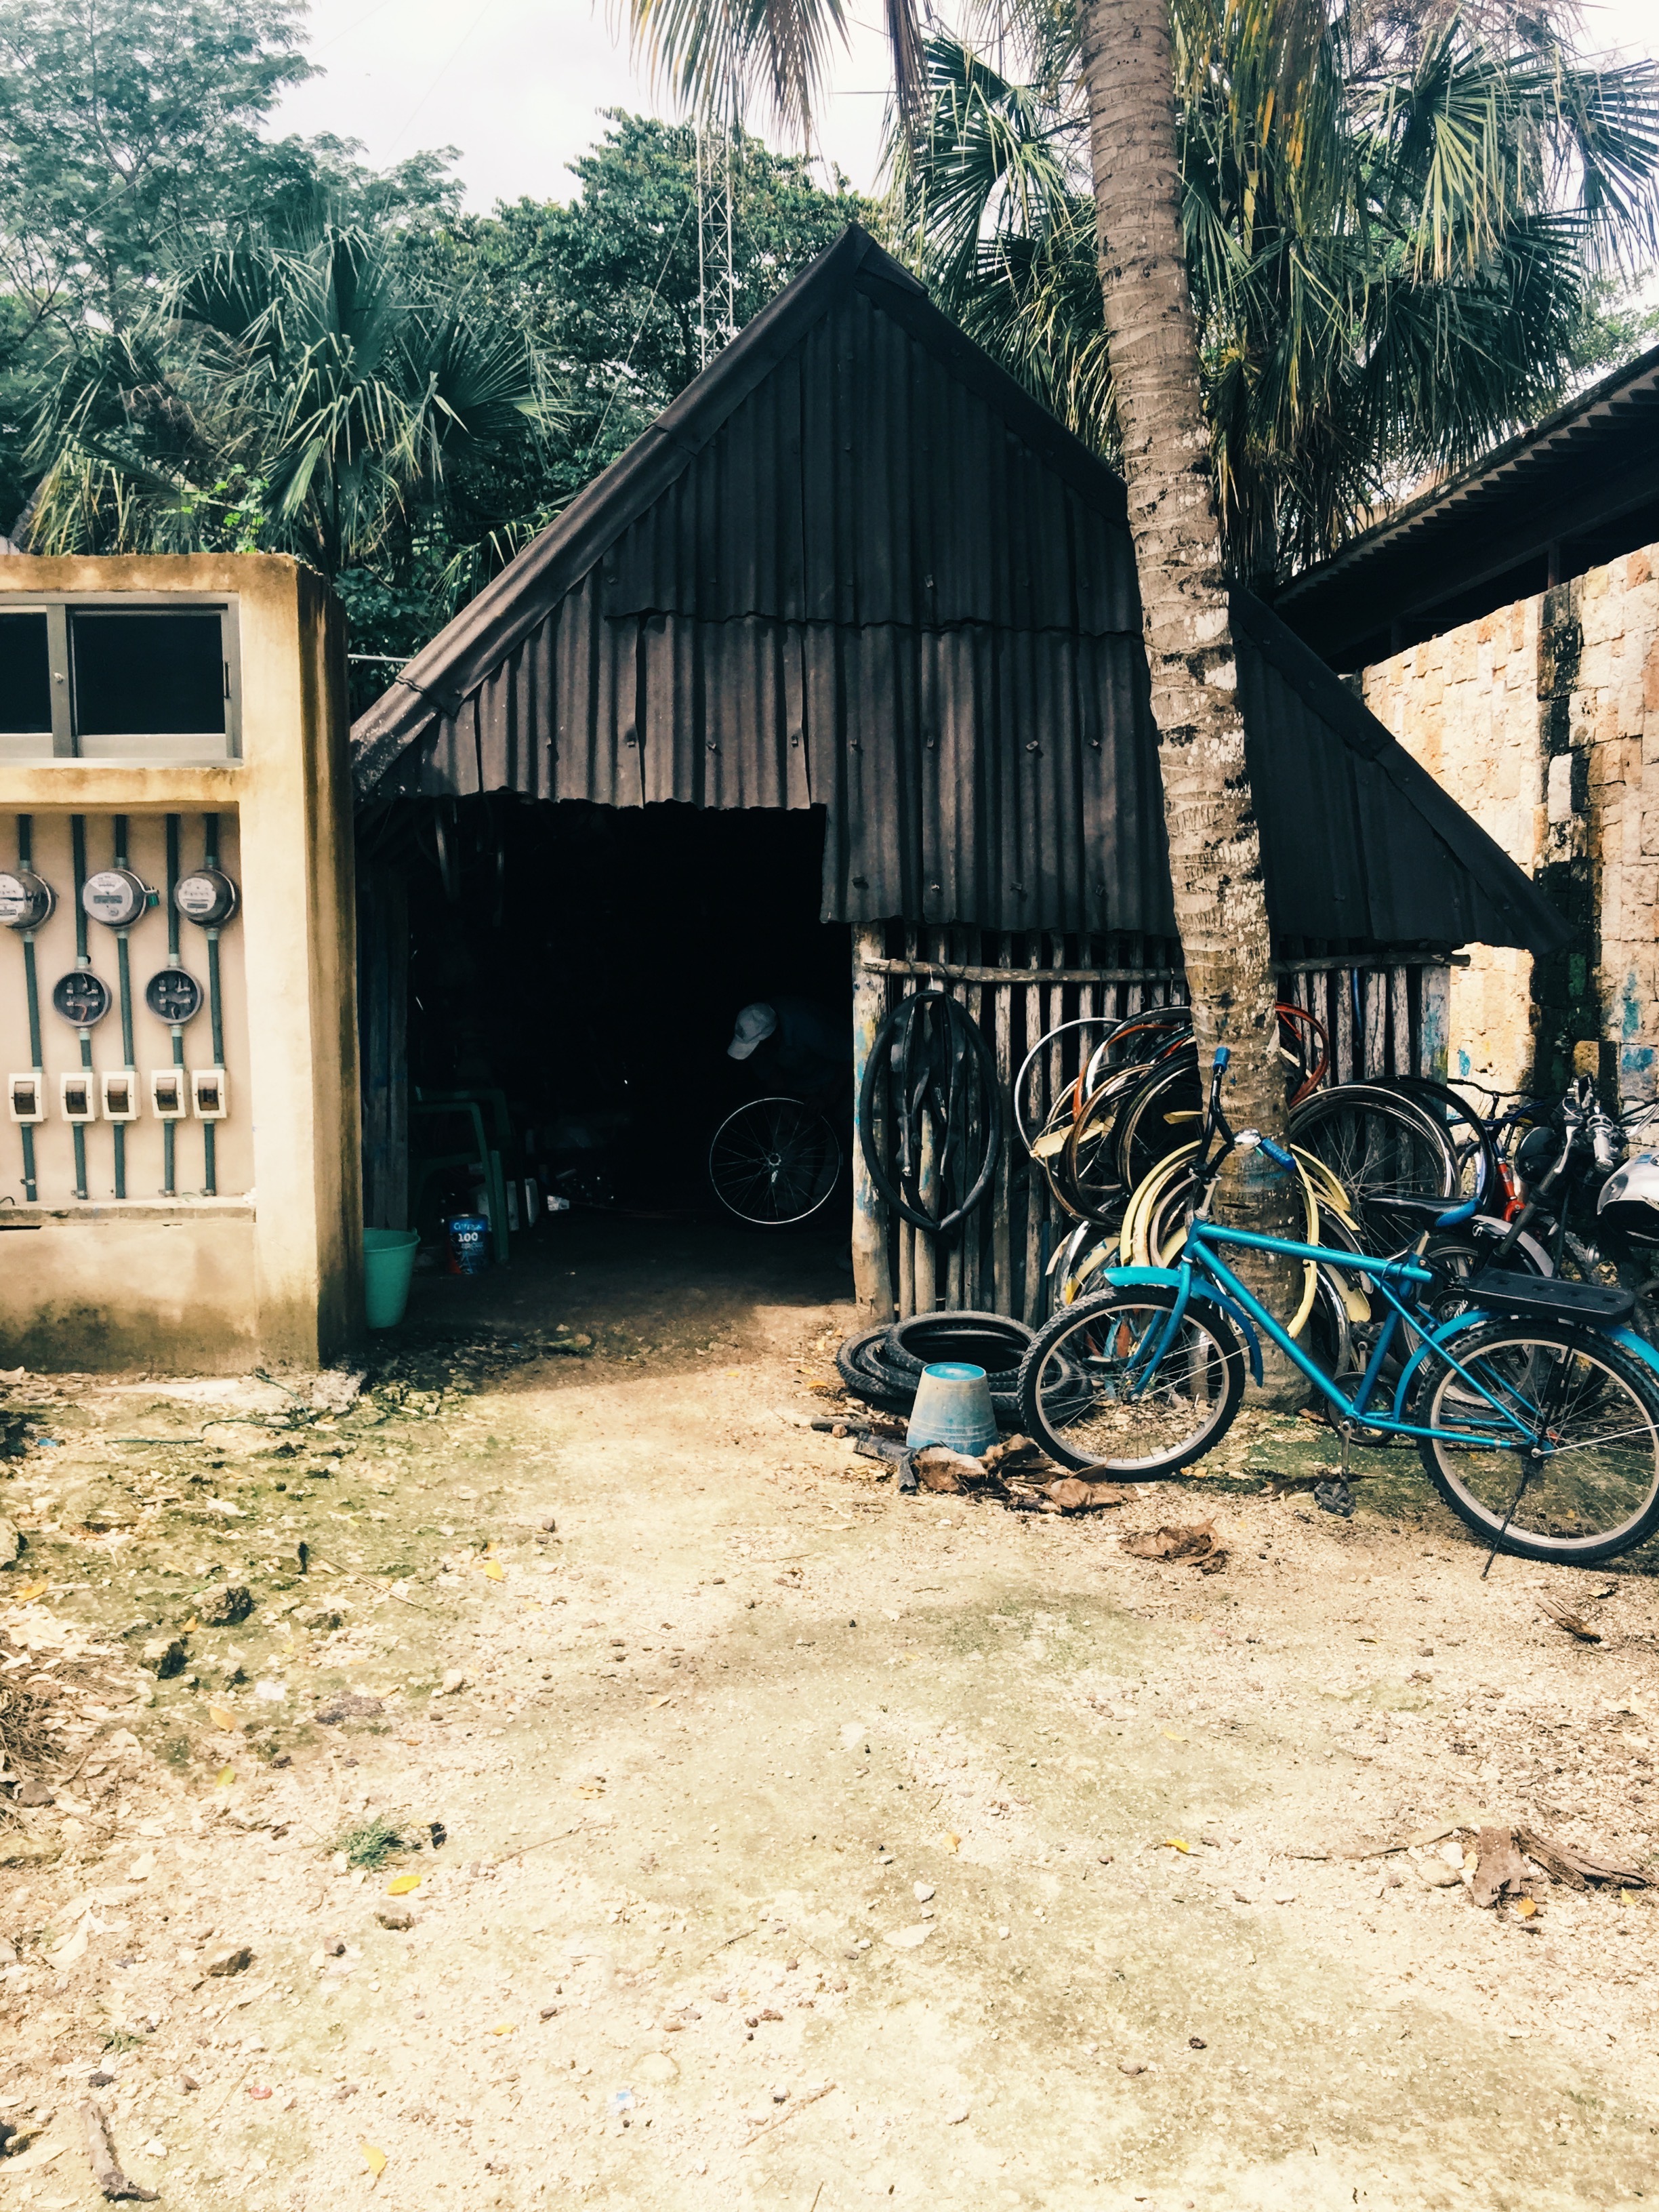 iPhone 6s Plus - Bike repair and rental shop near Coba mayan pyramids. On a trip to Cancun